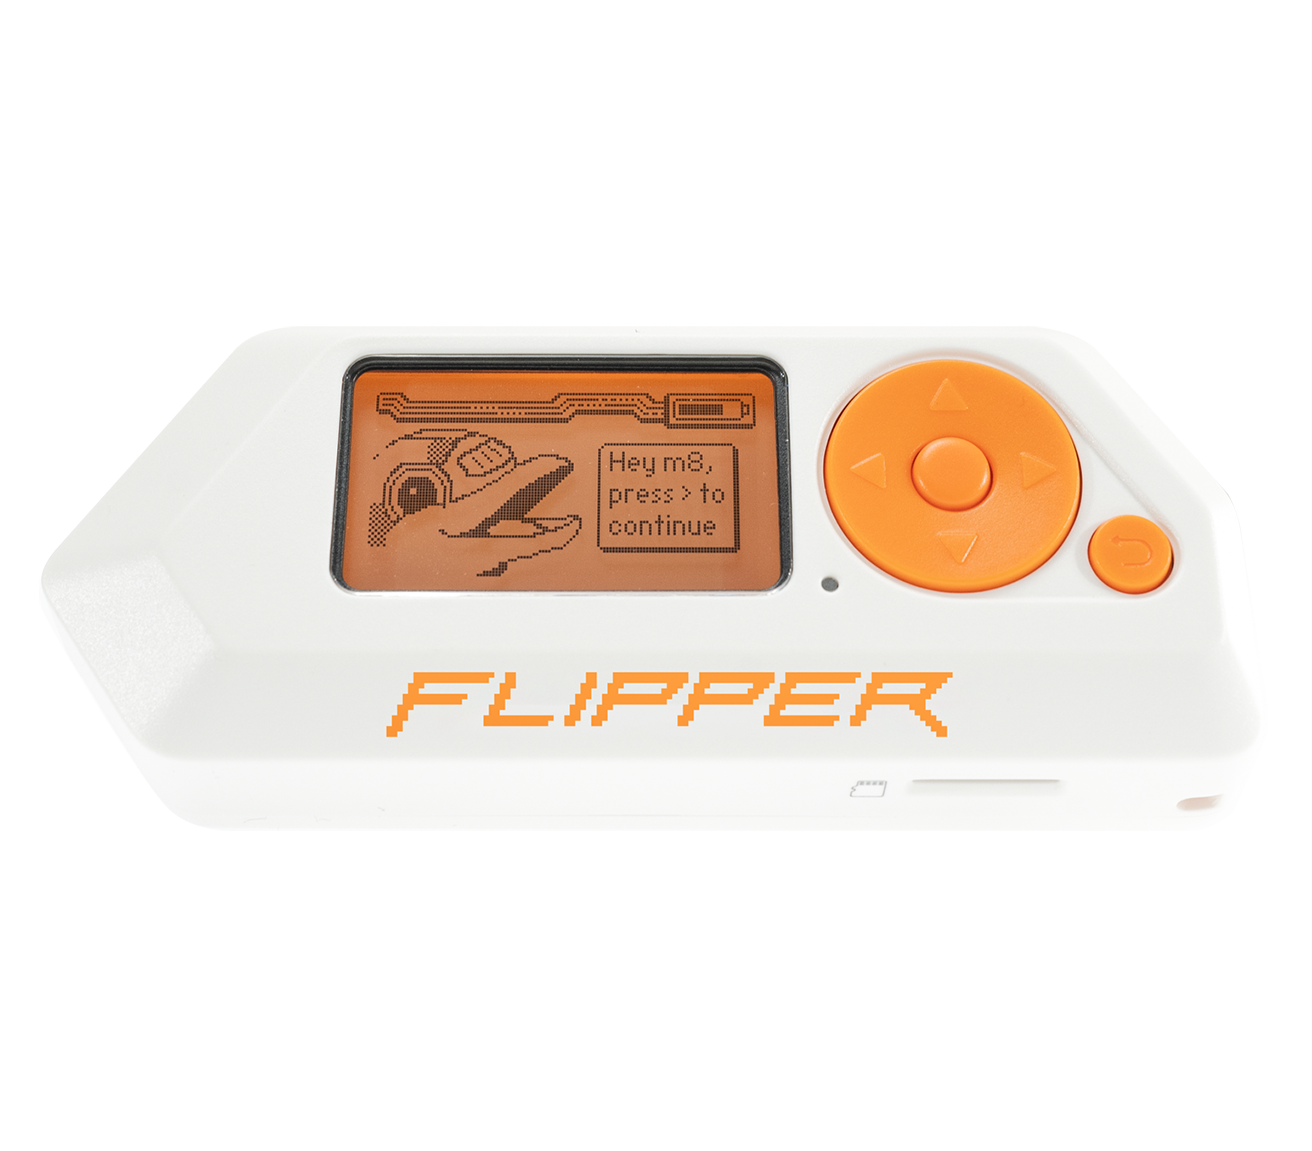 Flipper Zero – Lab401